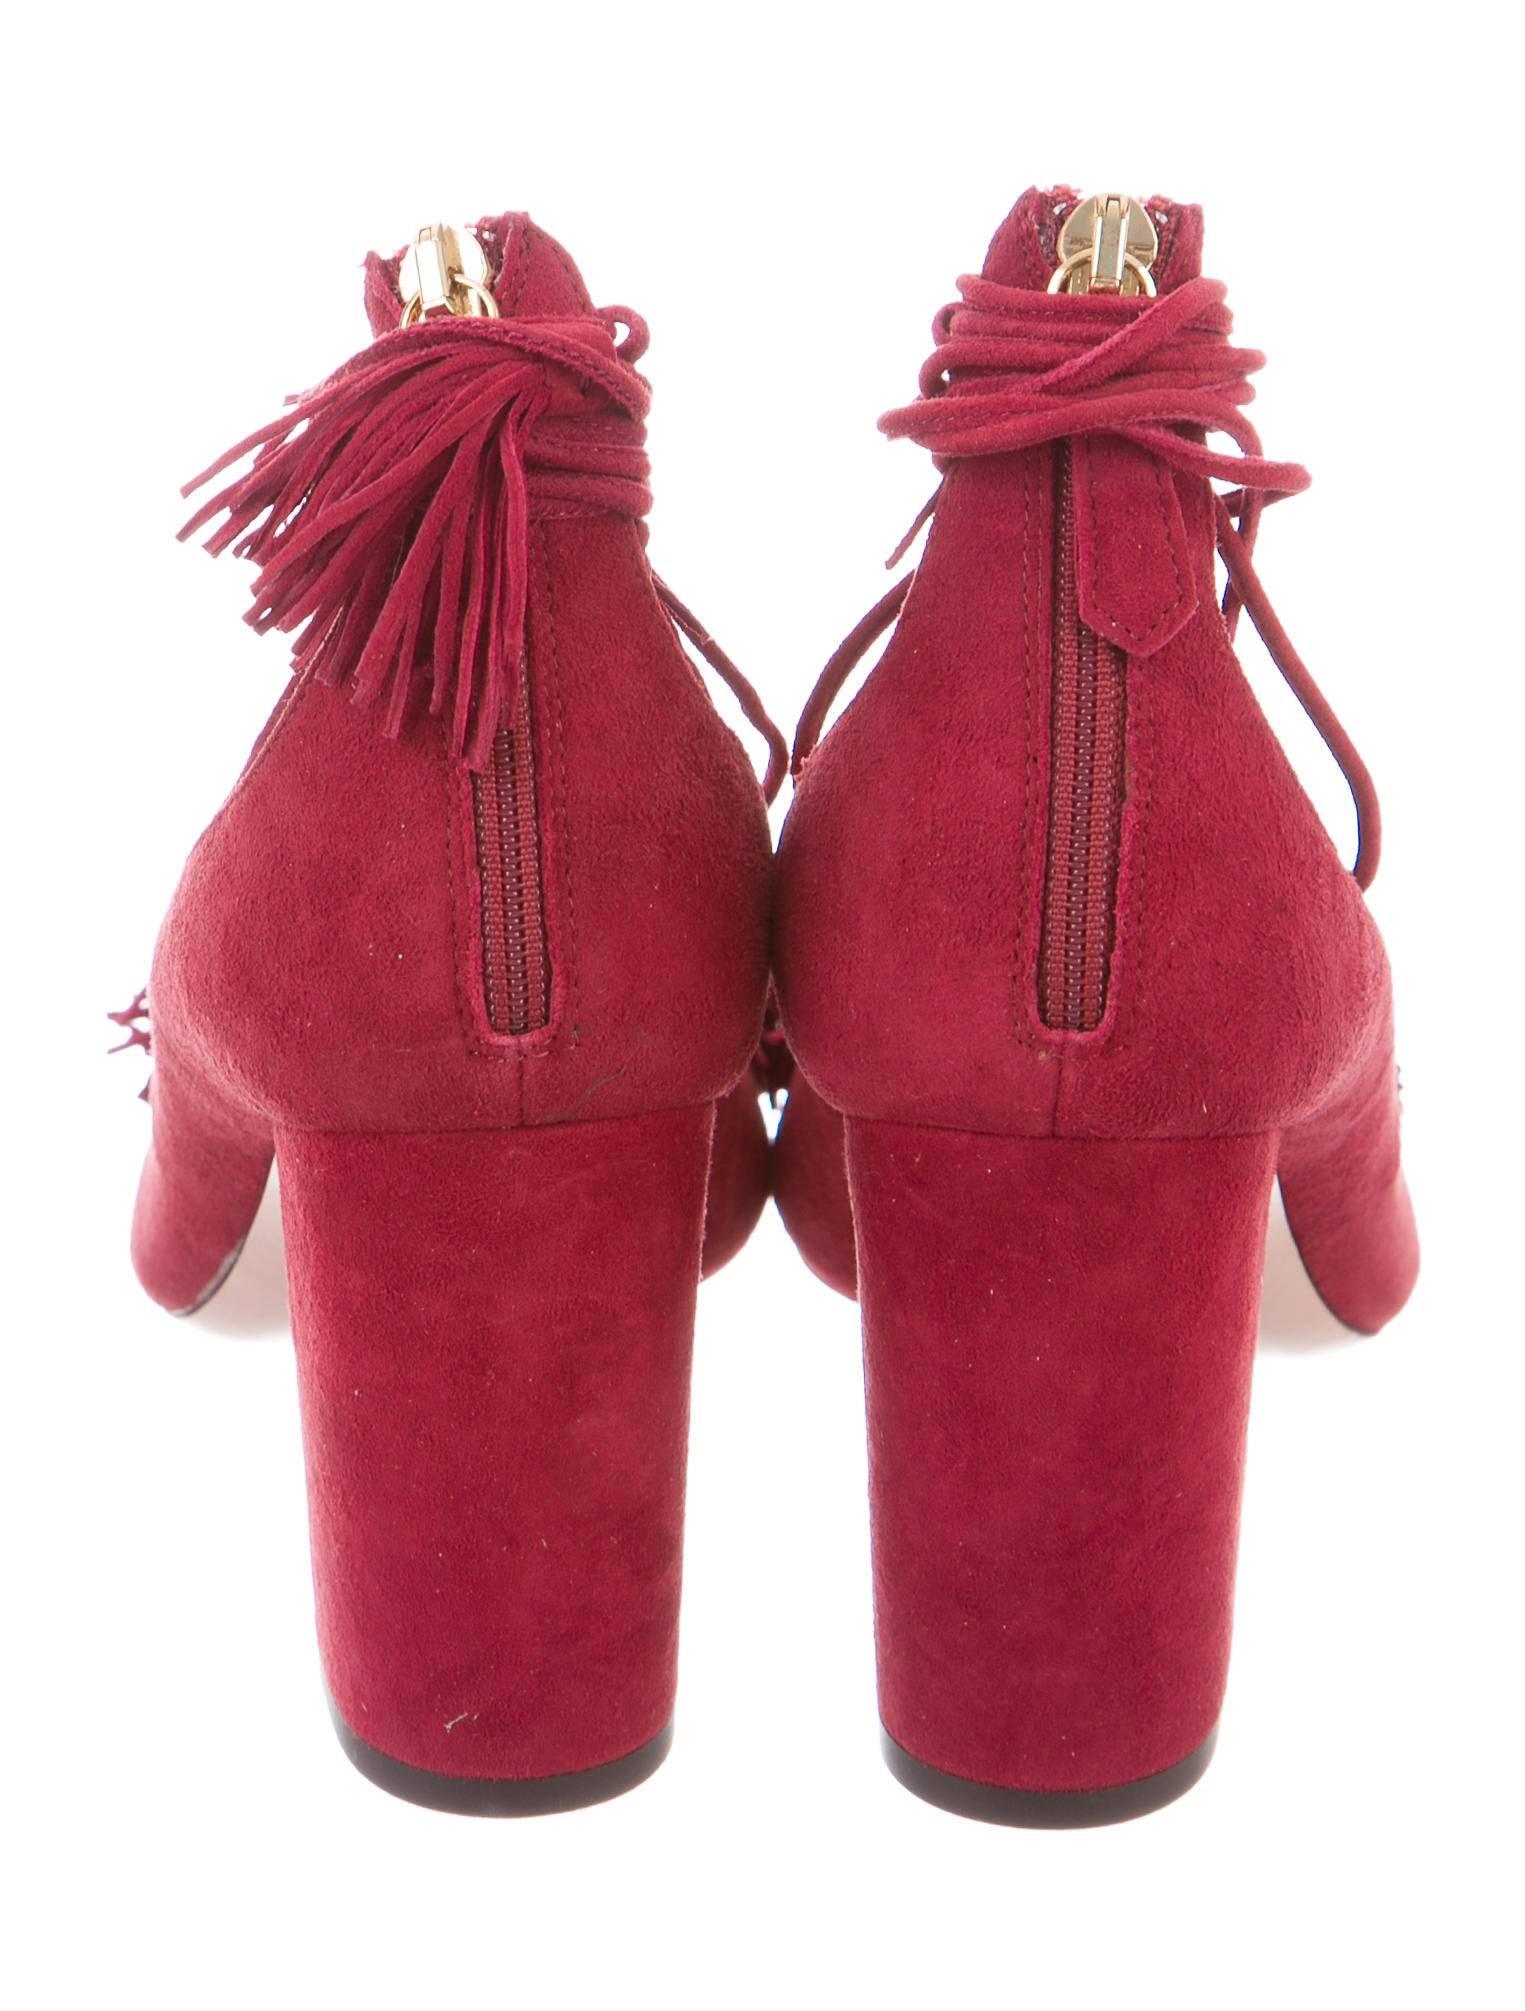 Women's Aquazzura New Red Cashmere Suede Tassel Tie Up Sandals Pumps in Box